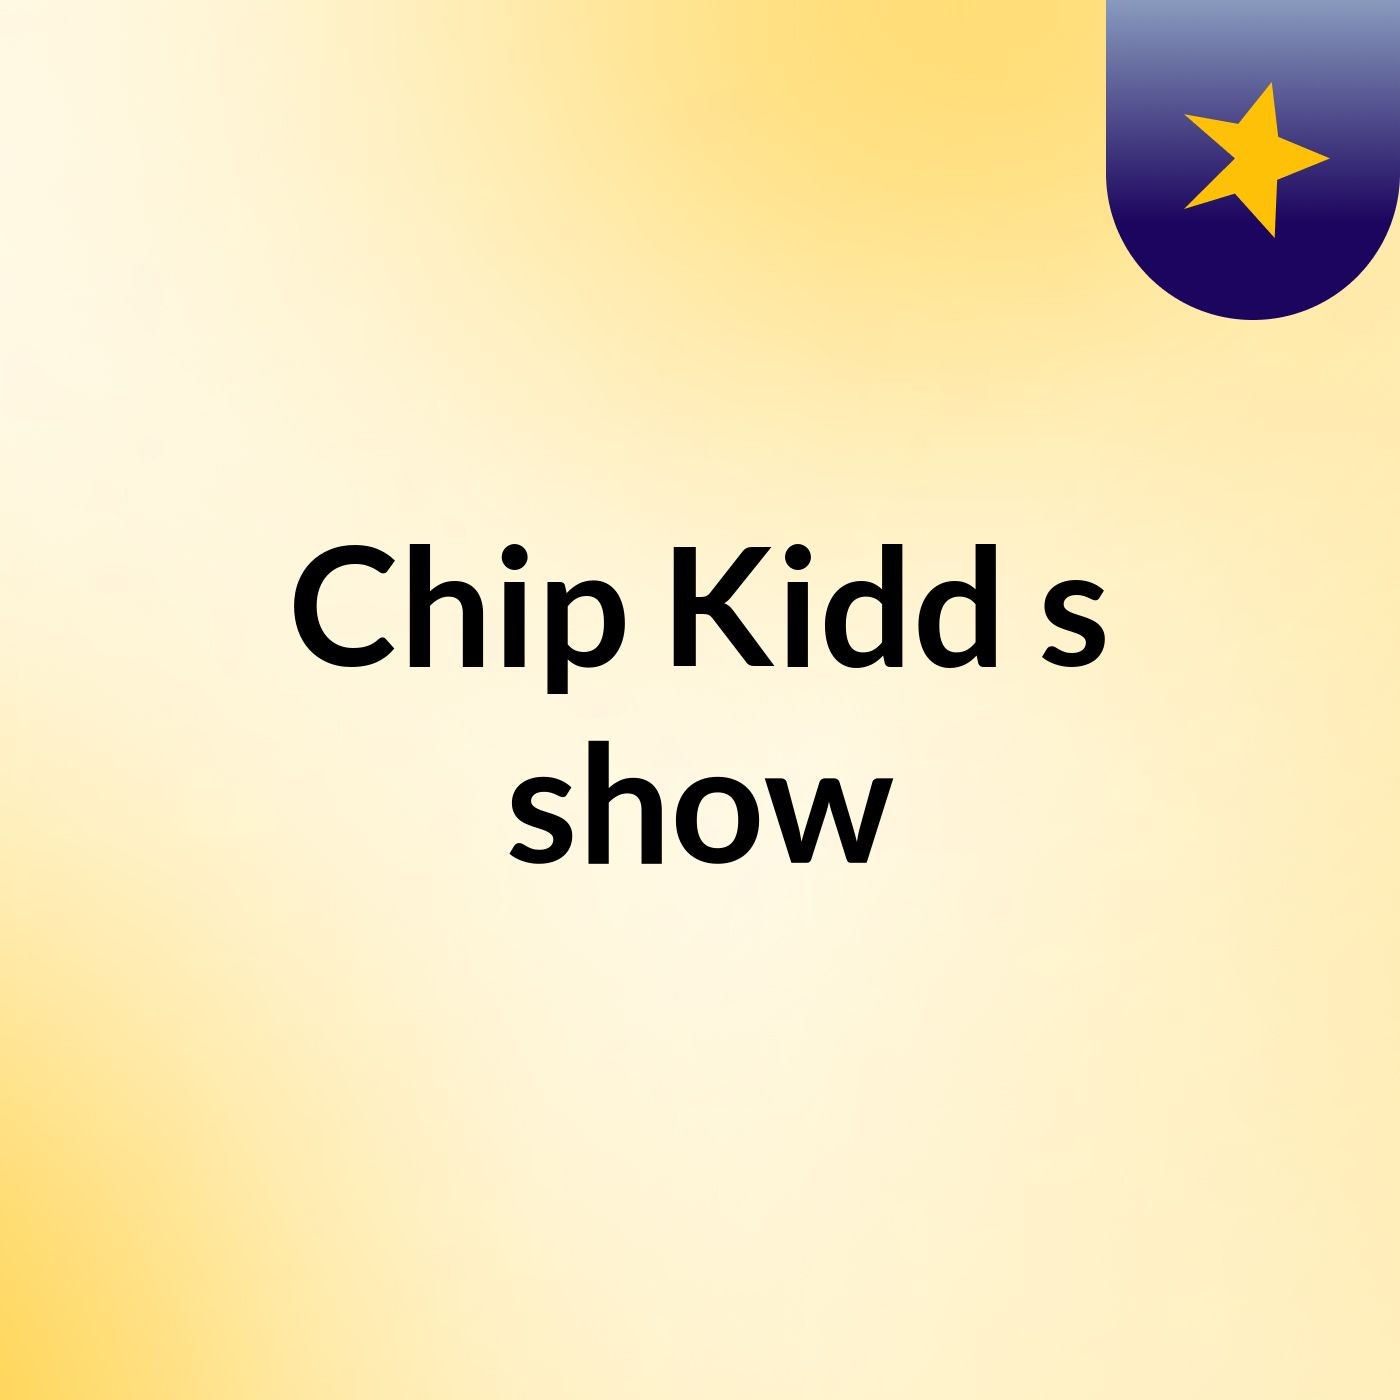 Chip Kidd's show